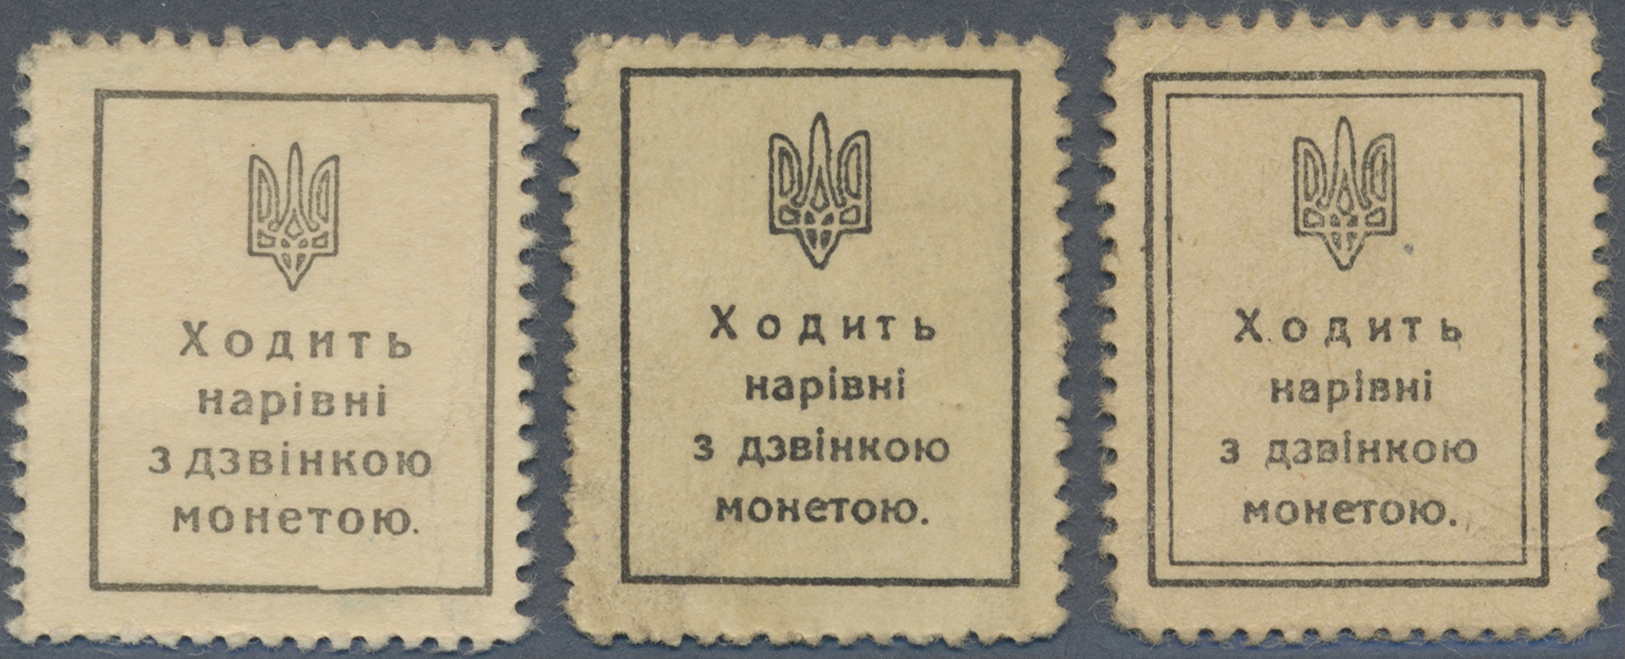 03155 Ukraina / Ukraine: Set Of 3 Stamp Money Issues 20, 40, 50 Shagiv ND(1918) P. 8, 10a, 11 In Condition: UNC: (3 Pcs) - Ukraine